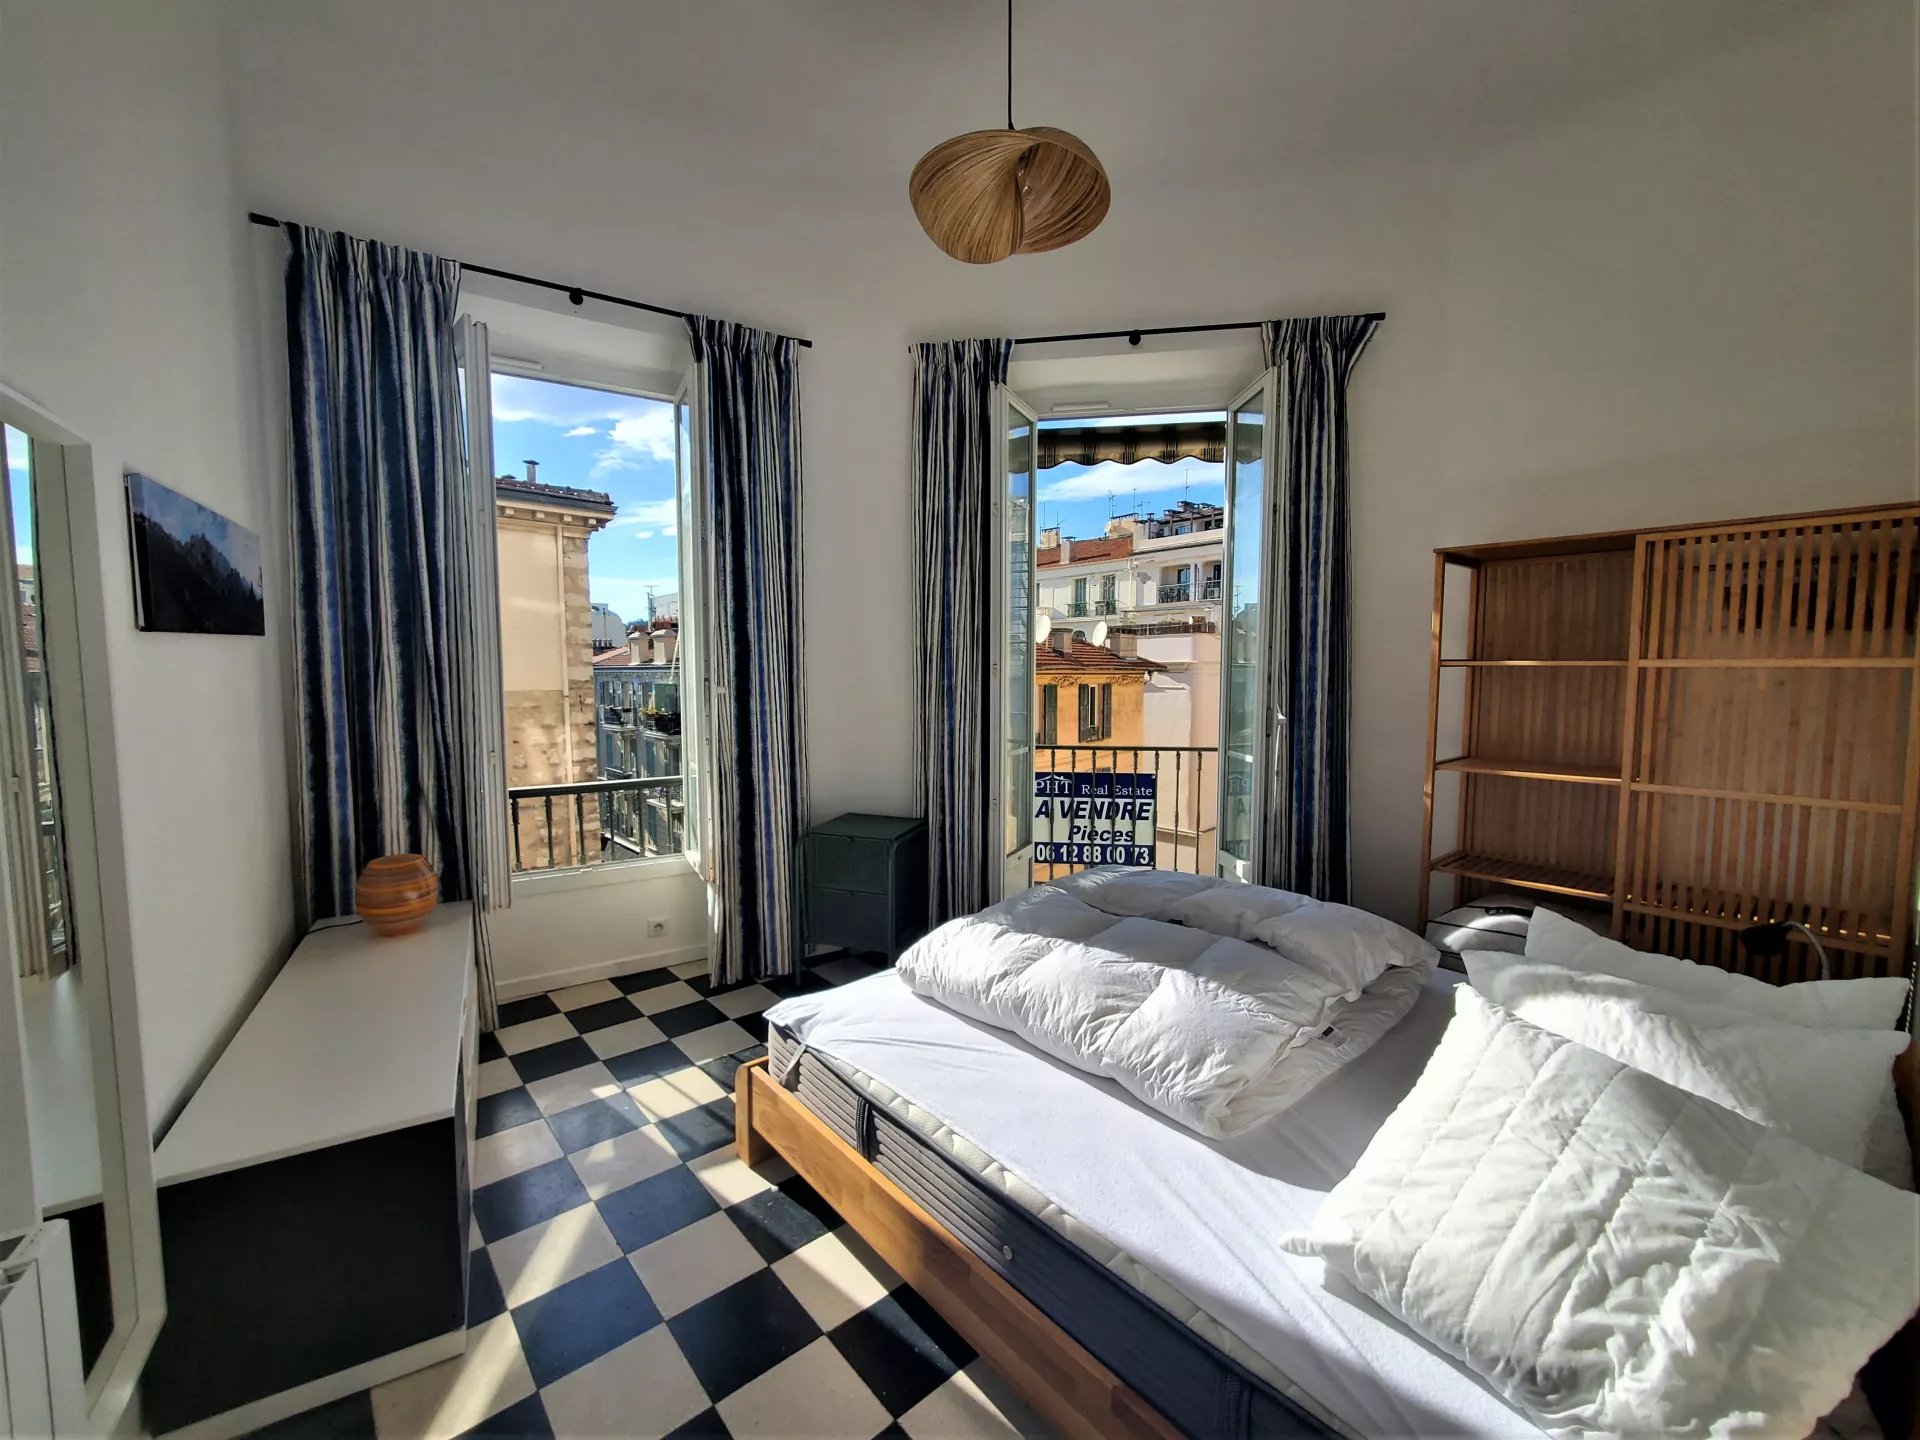 Affitto stagionale Appartamento - Nizza (Nice) Carabacel